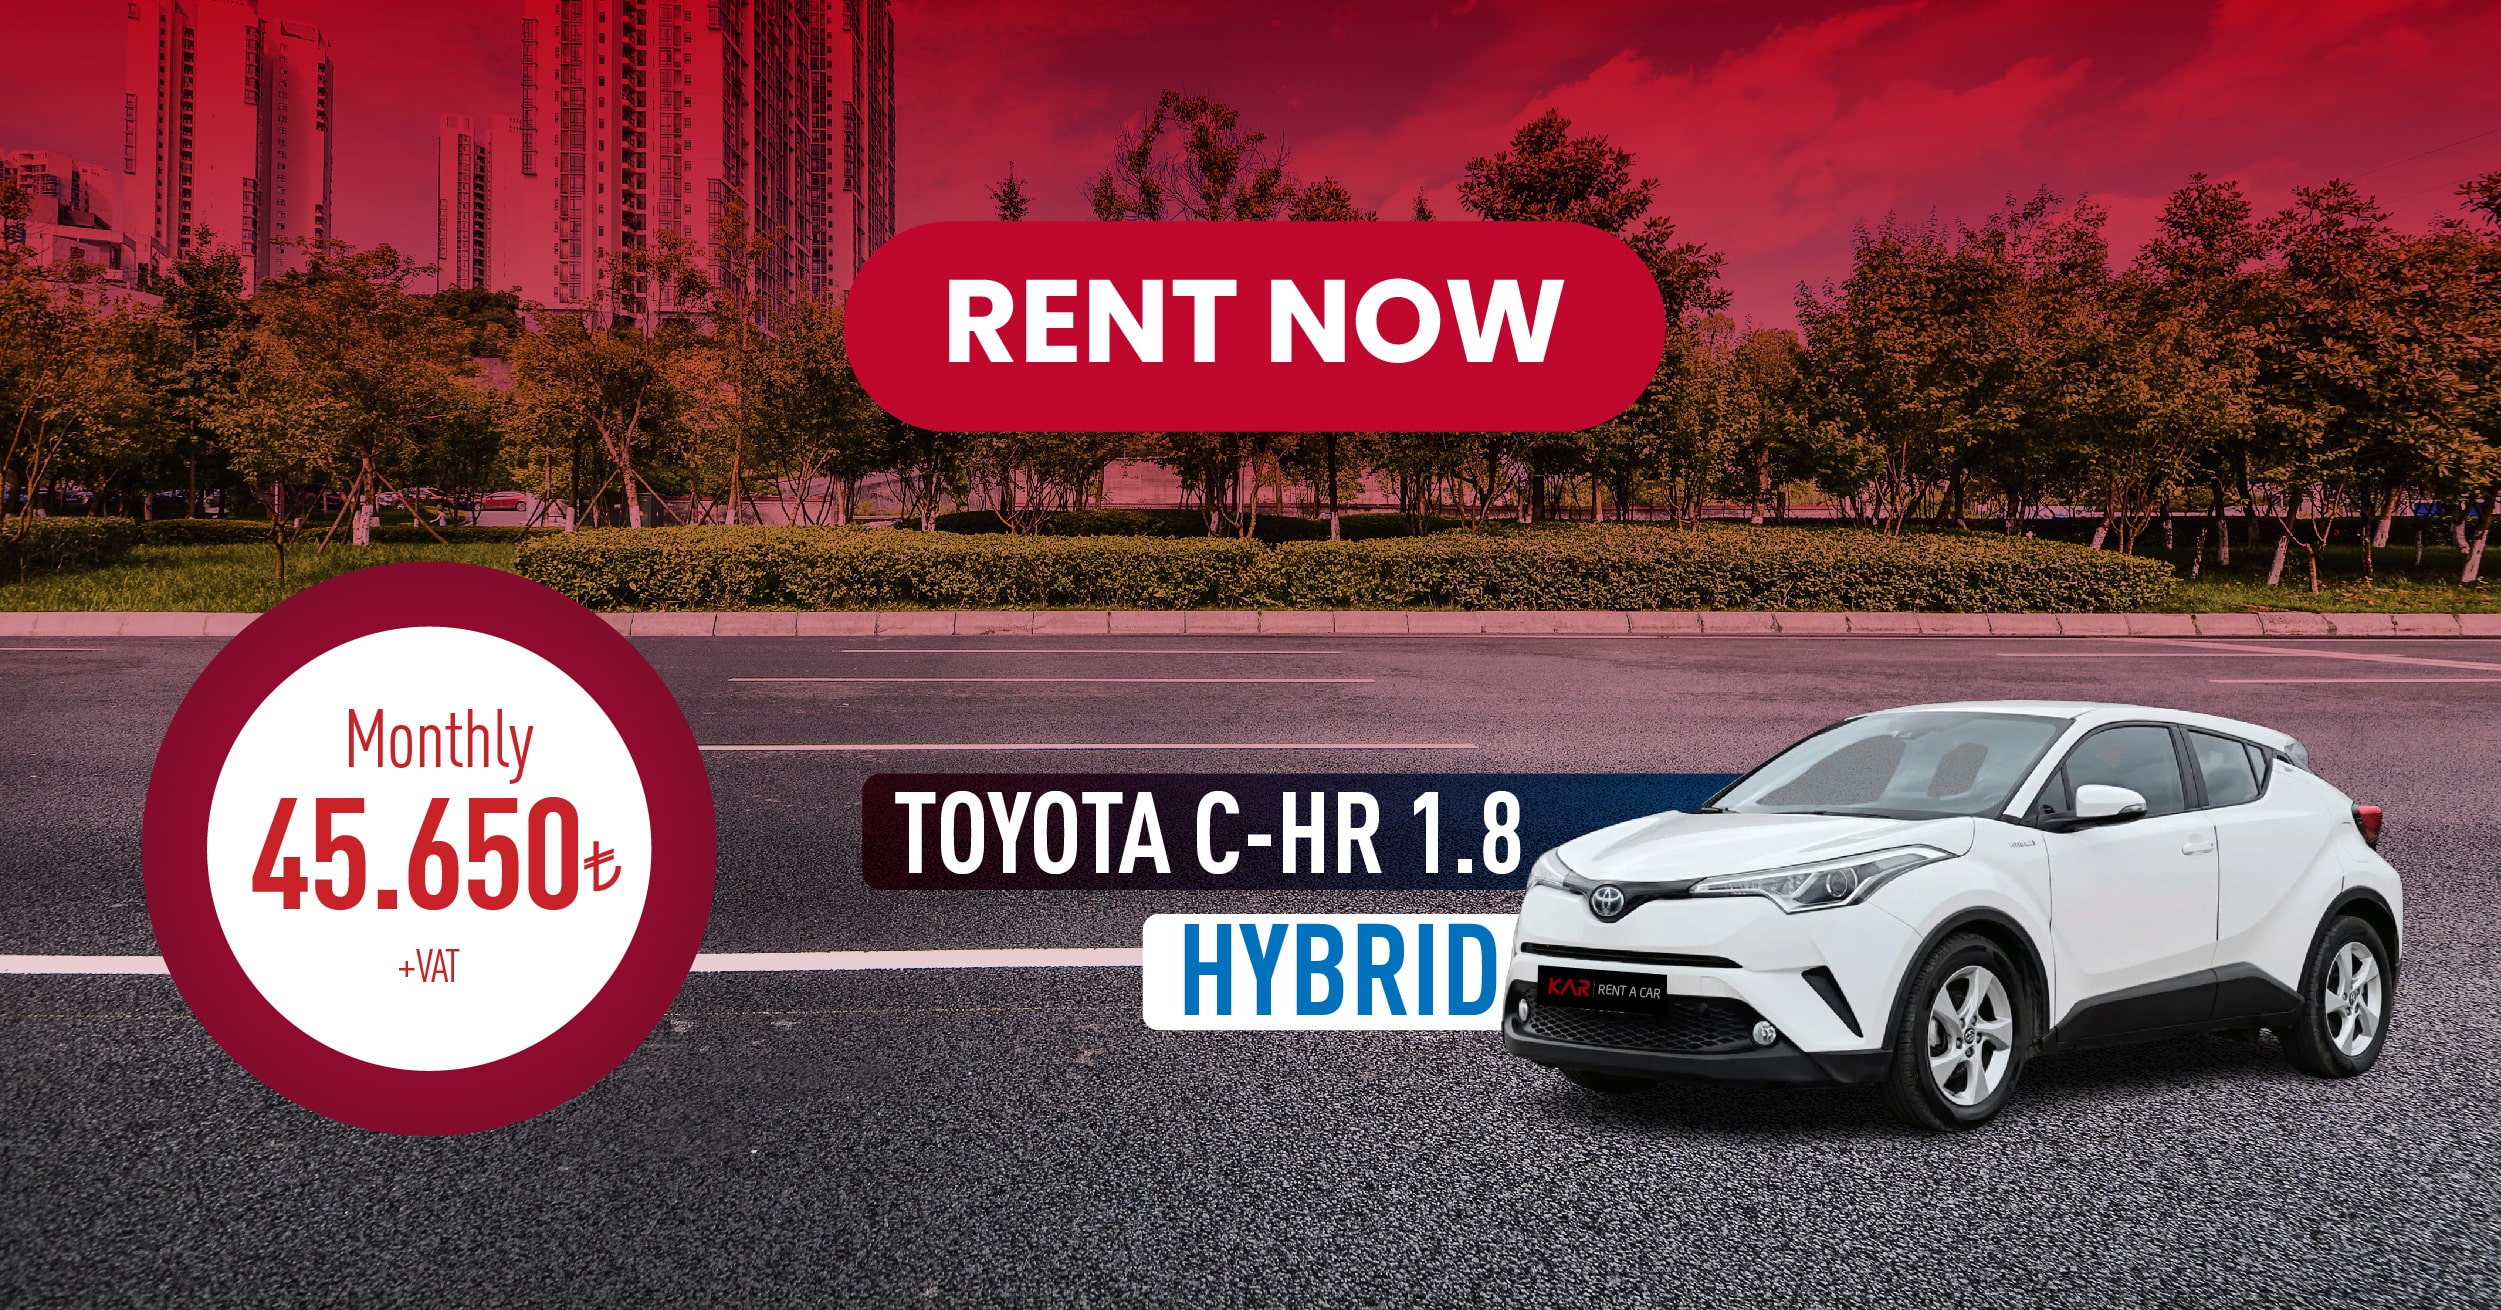 Toyota C-HR Campaign